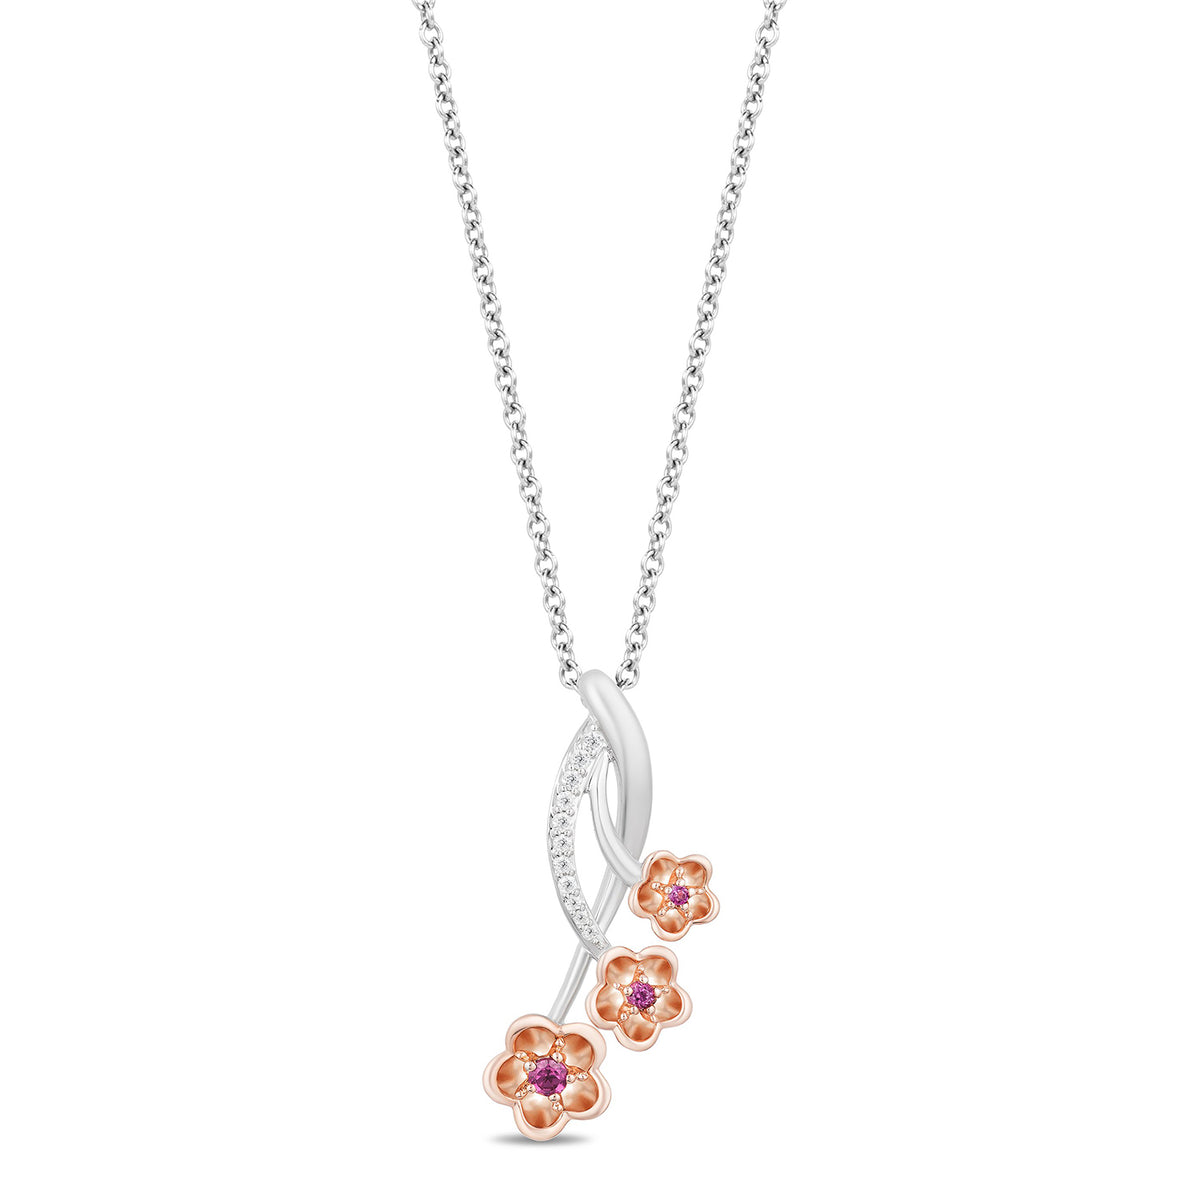 Buy Charismatic Diamond Choker Necklace Set Online